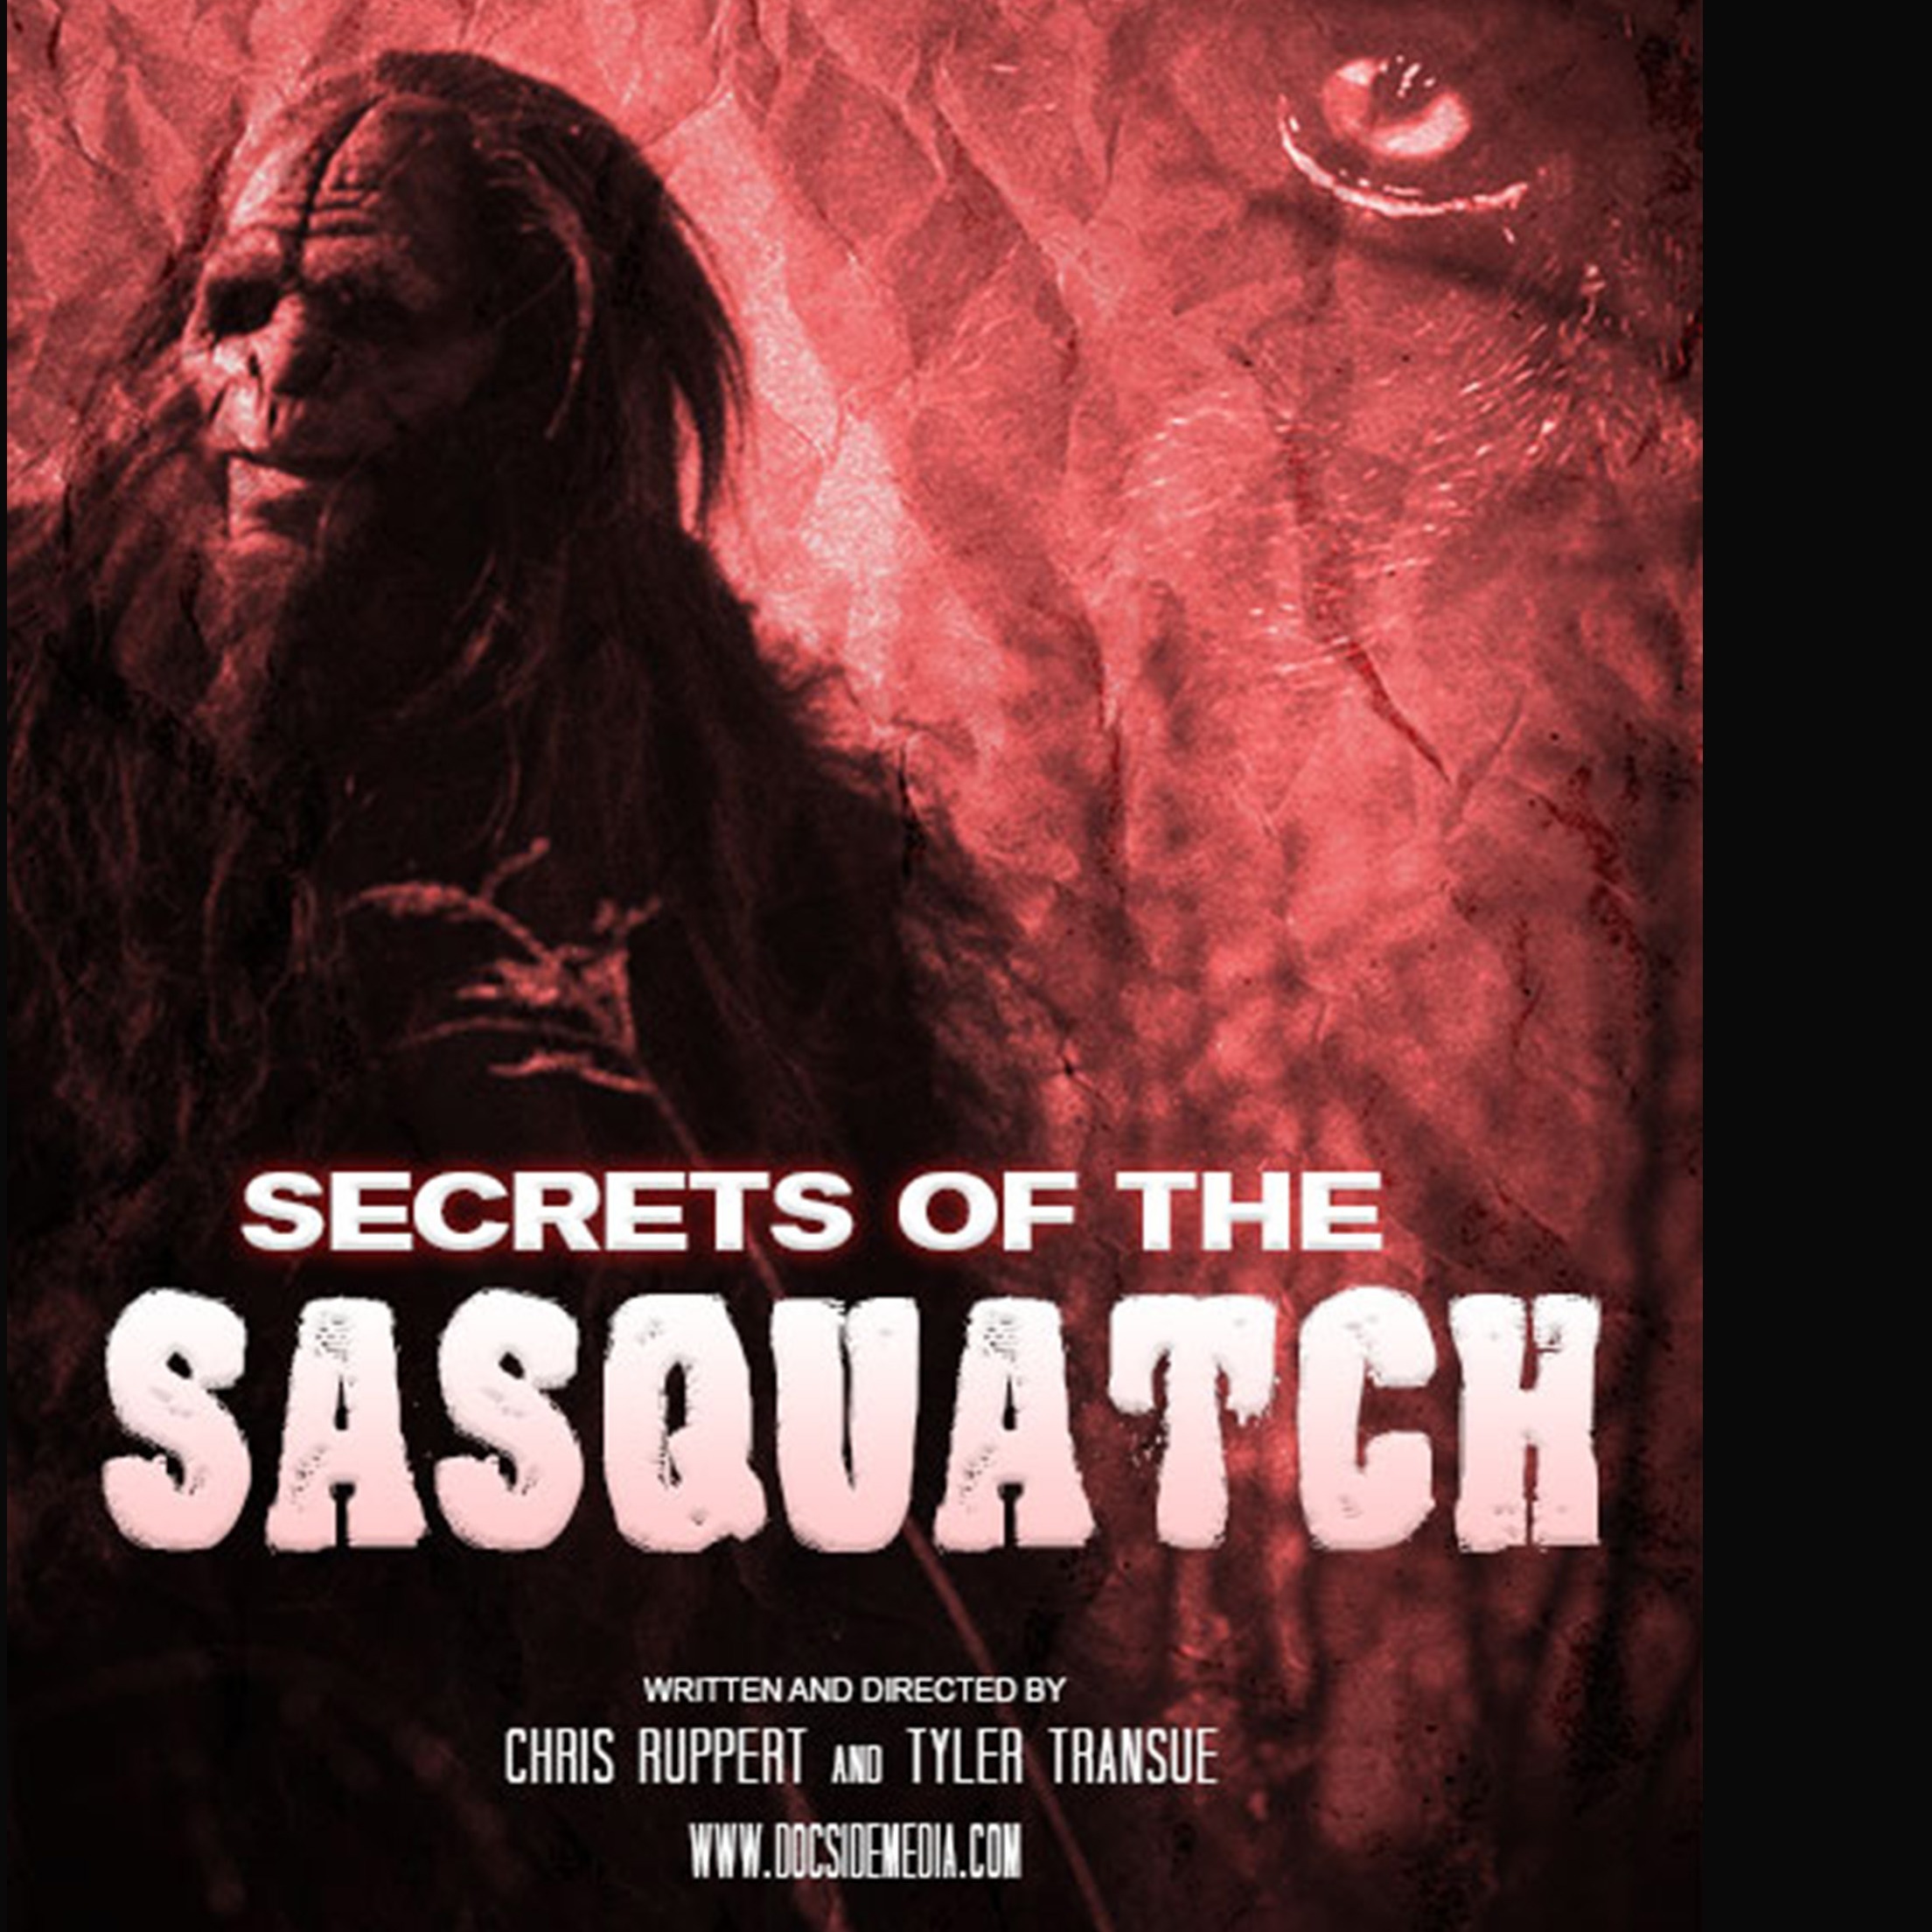 Tyler Transue on Secrets of Sasquatch